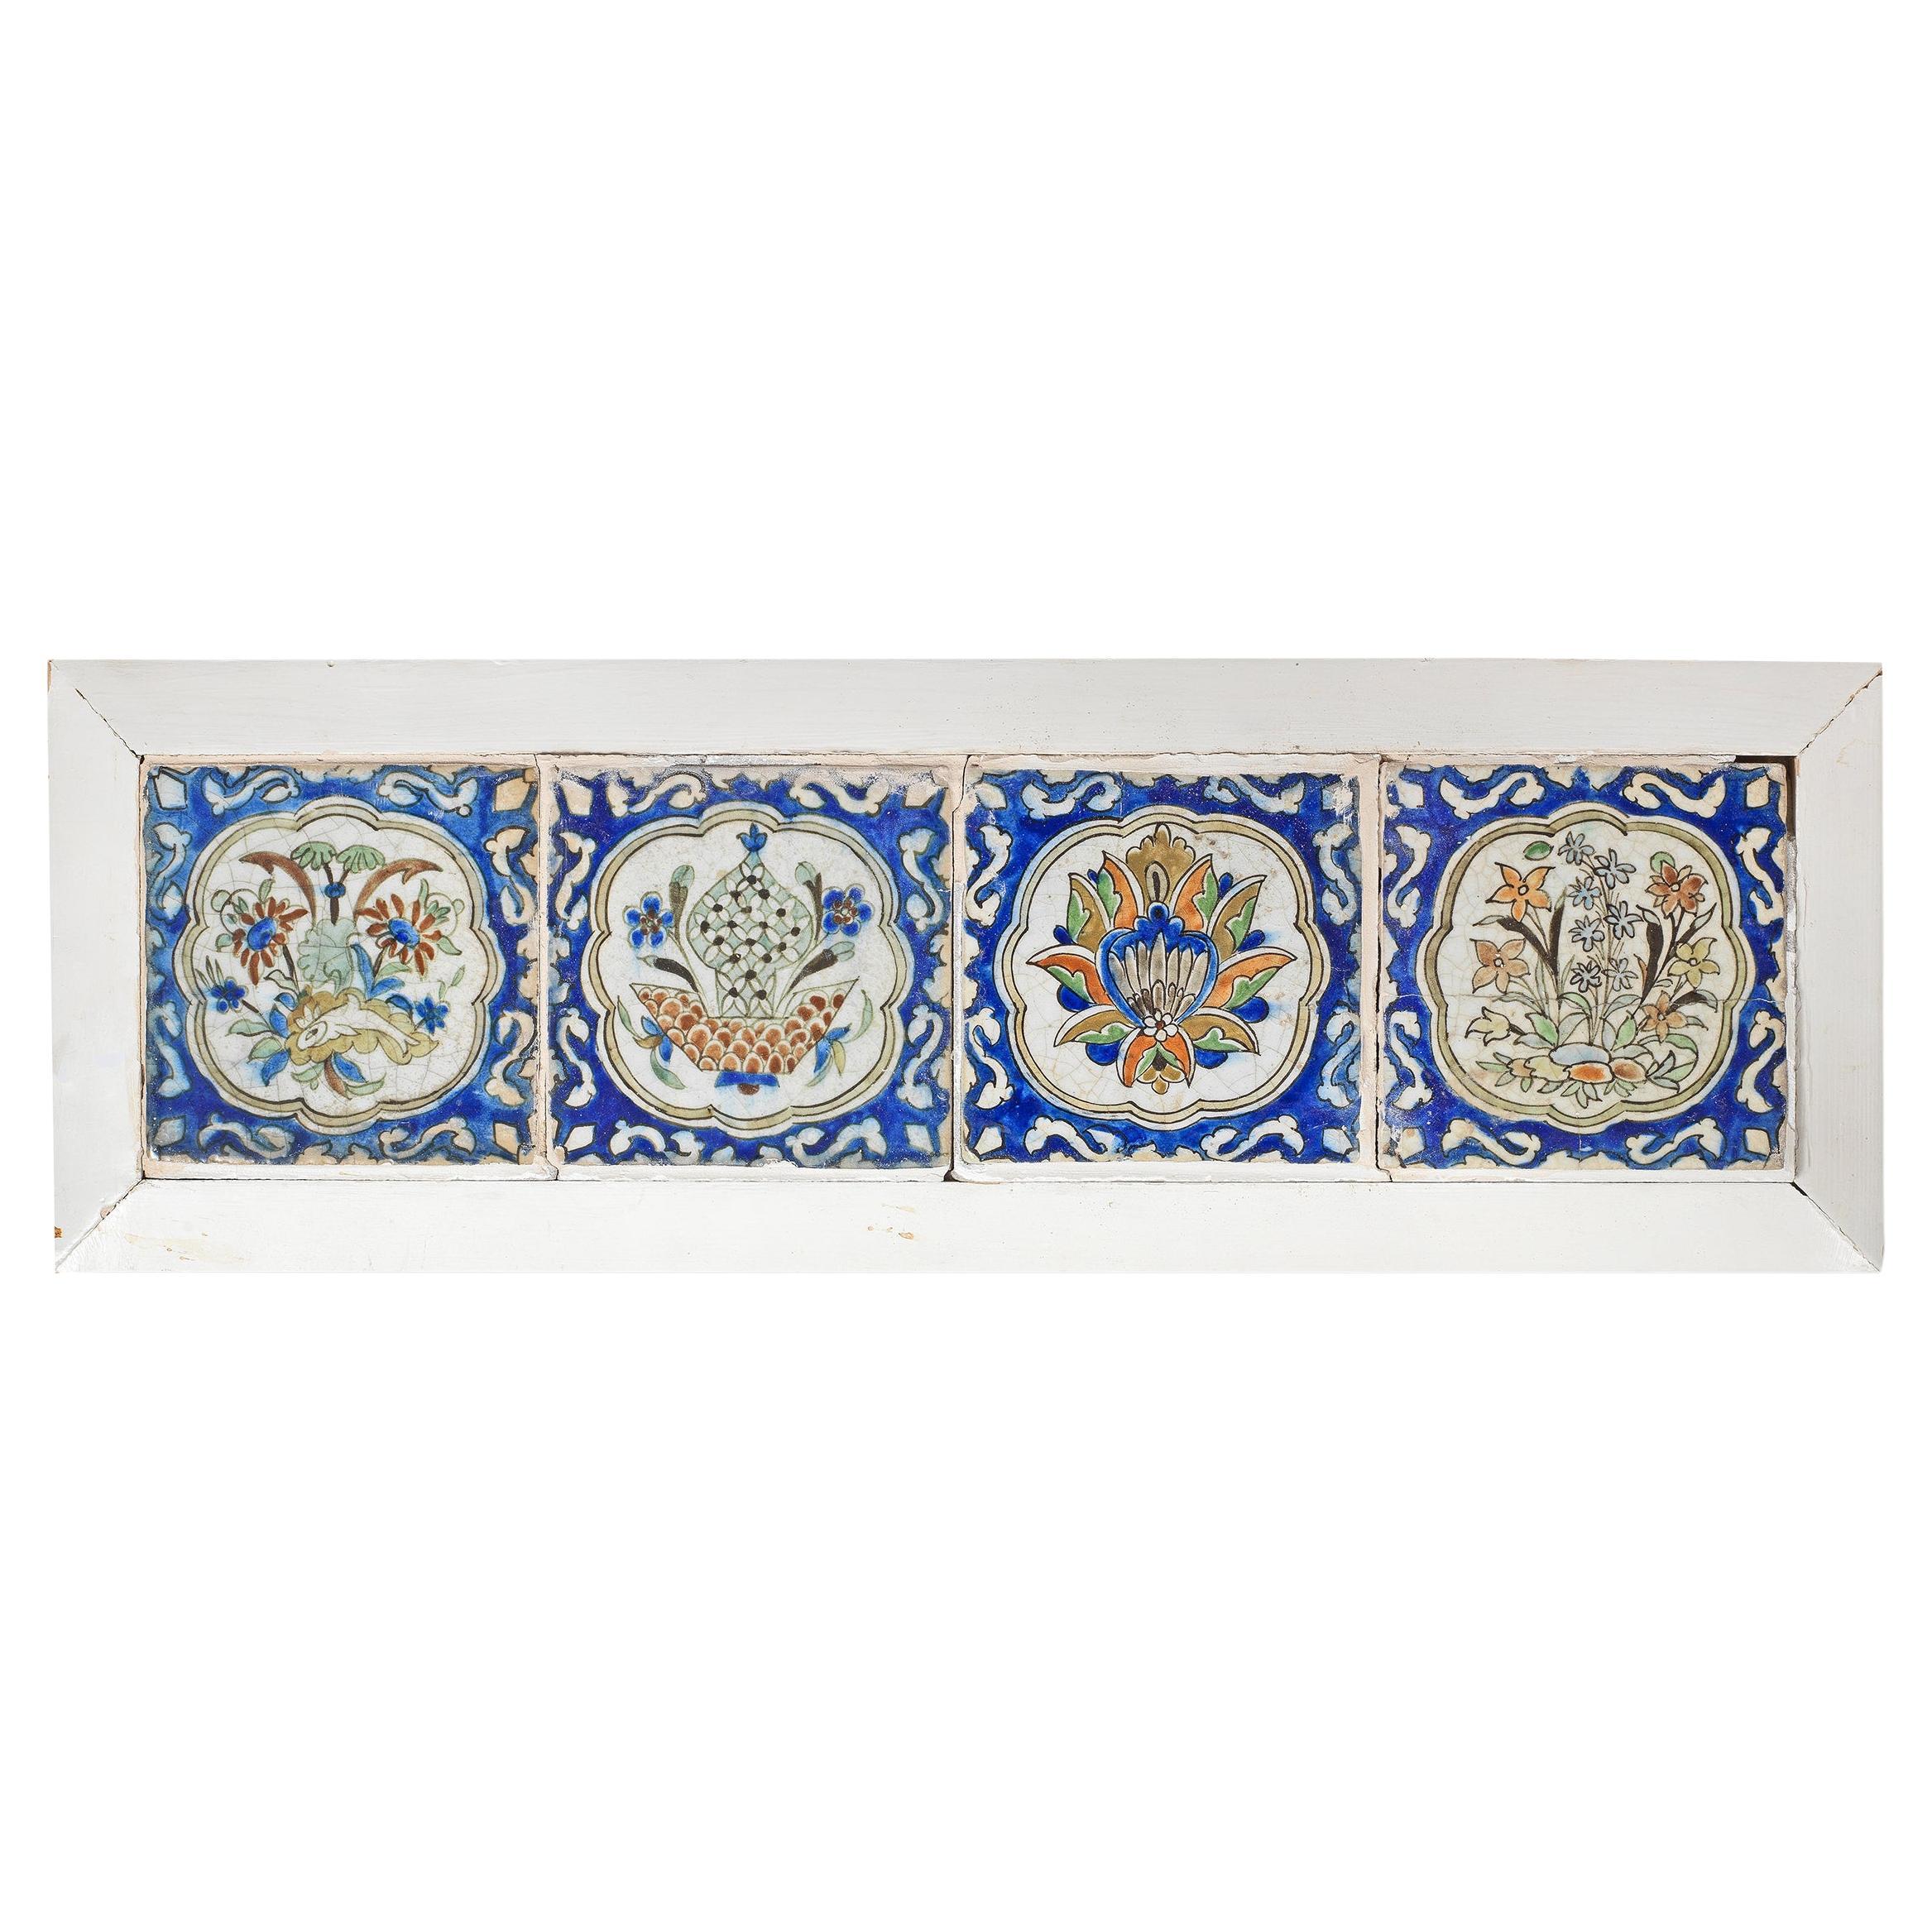 Kubachi-Keramikfliesen aus dem 17. Jahrhundert